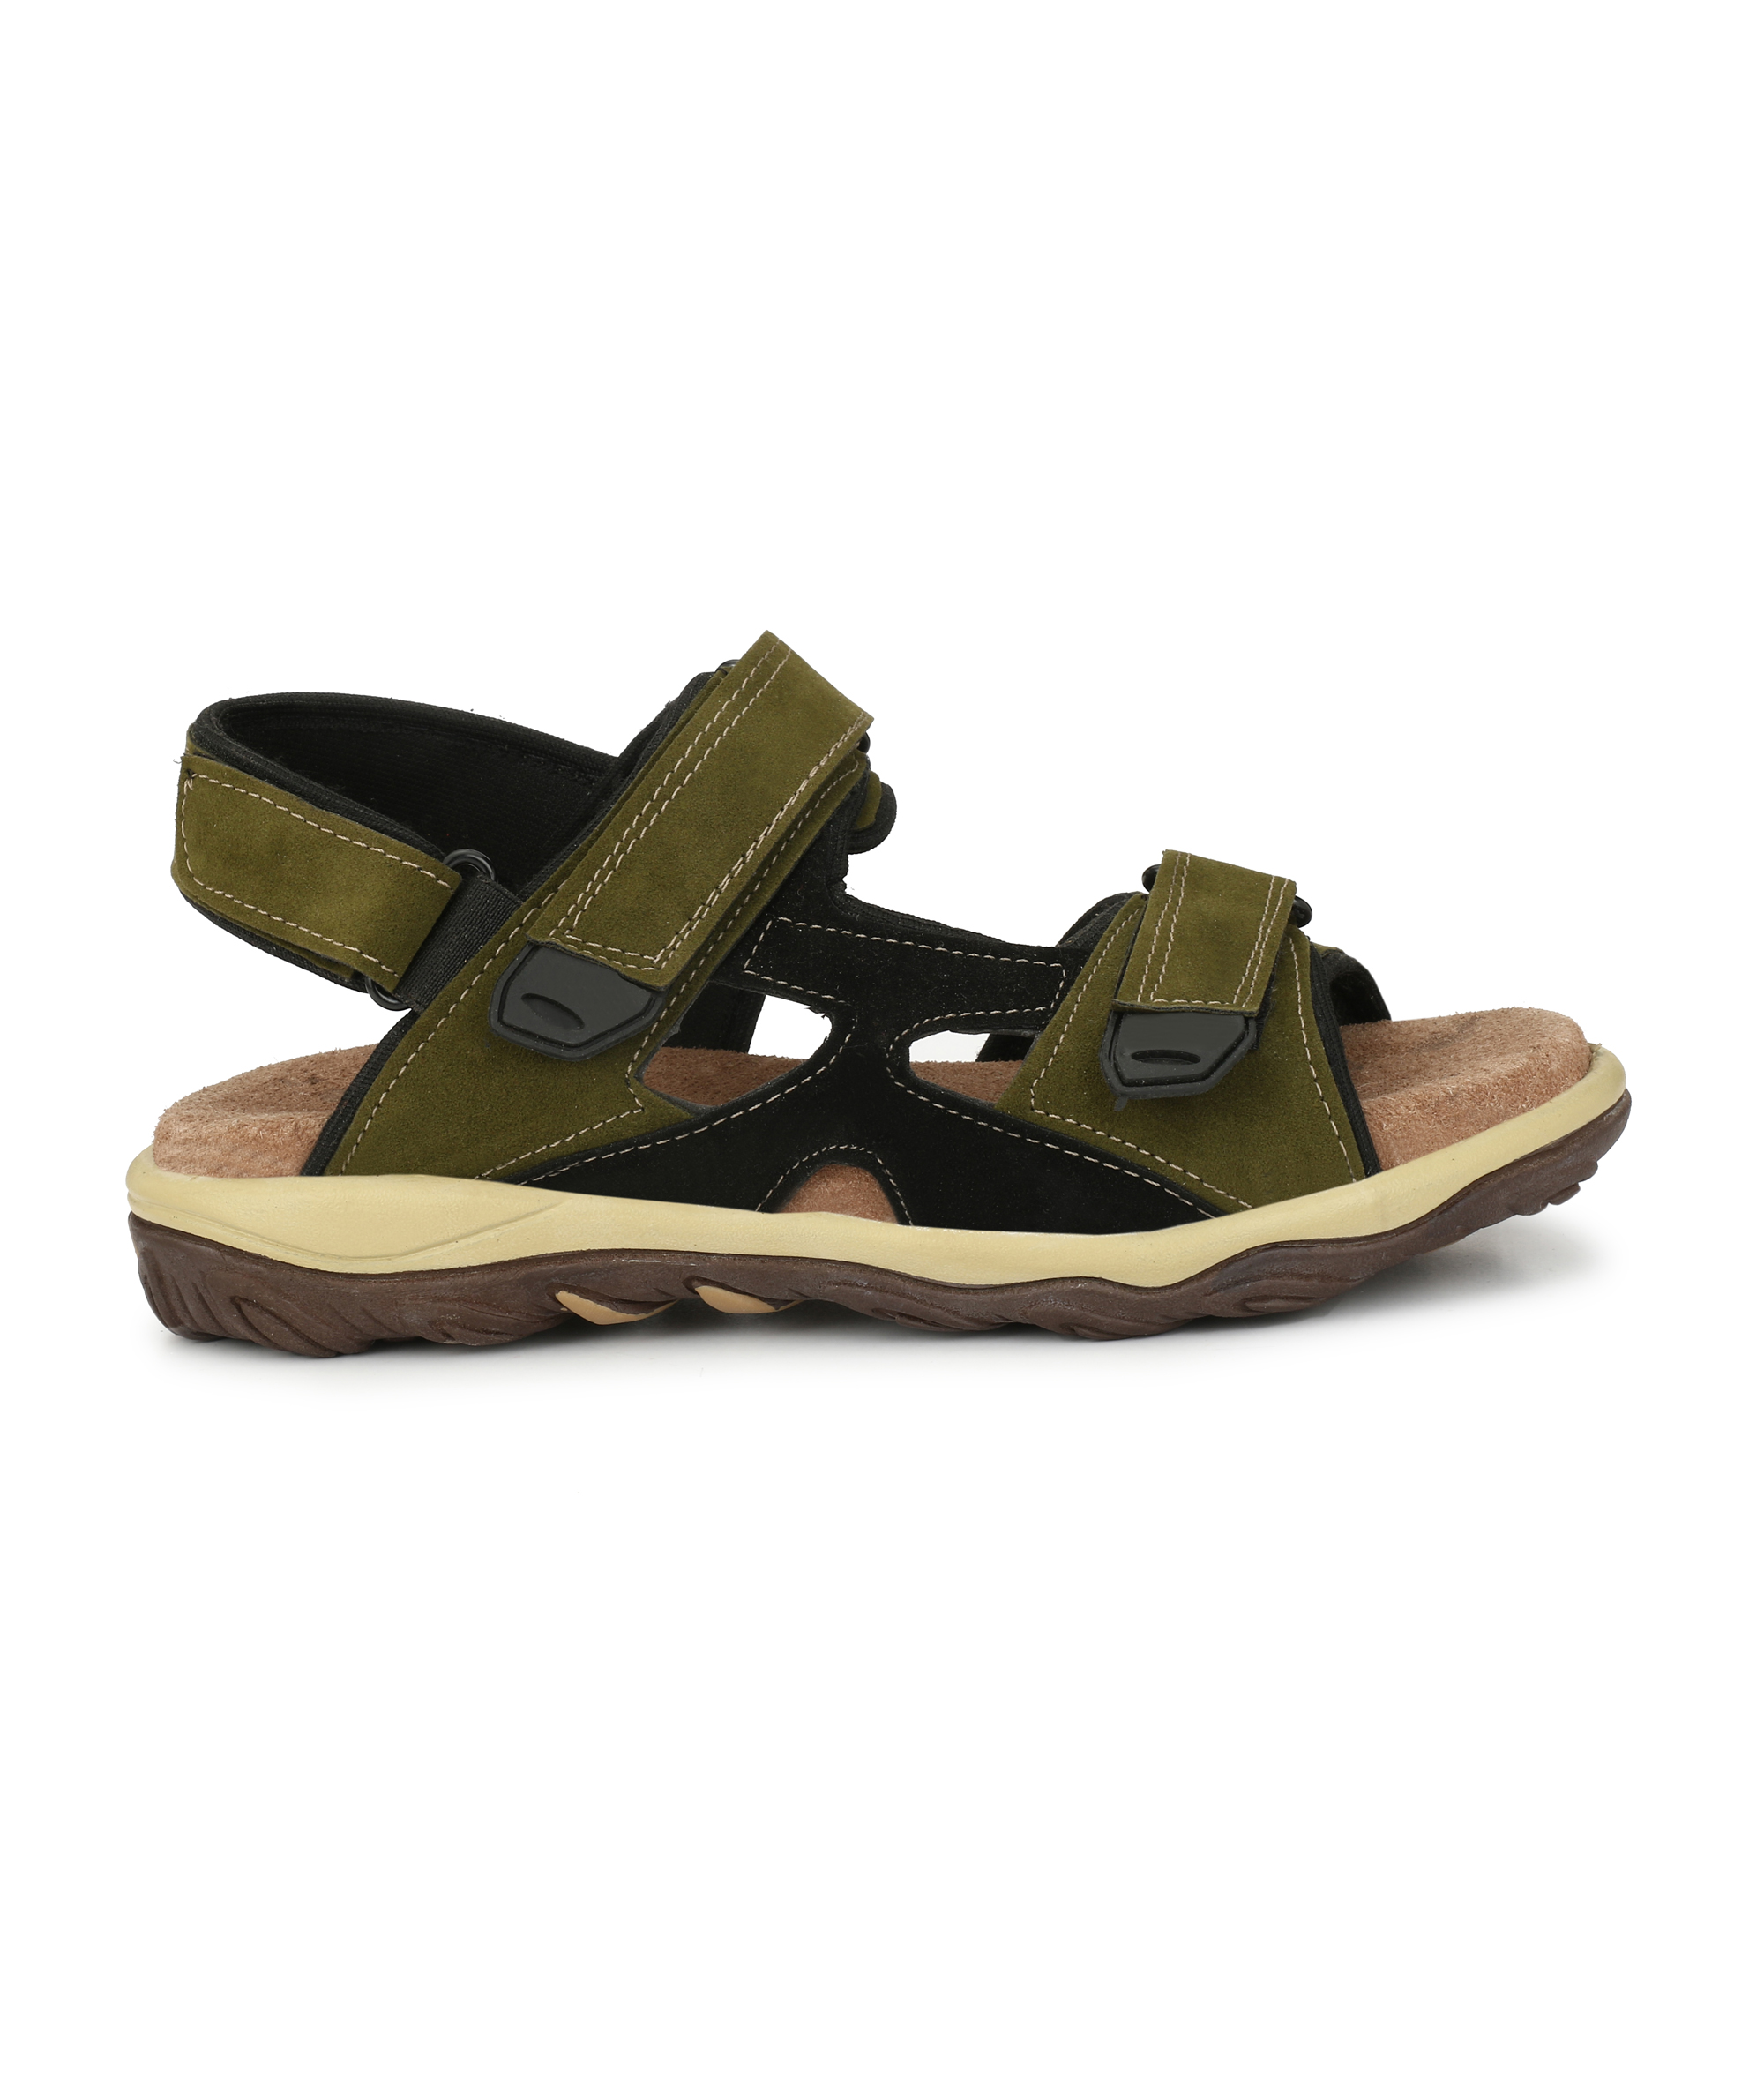 Buy Men's Olive Velcro Sandals Online @ ₹771 from ShopClues